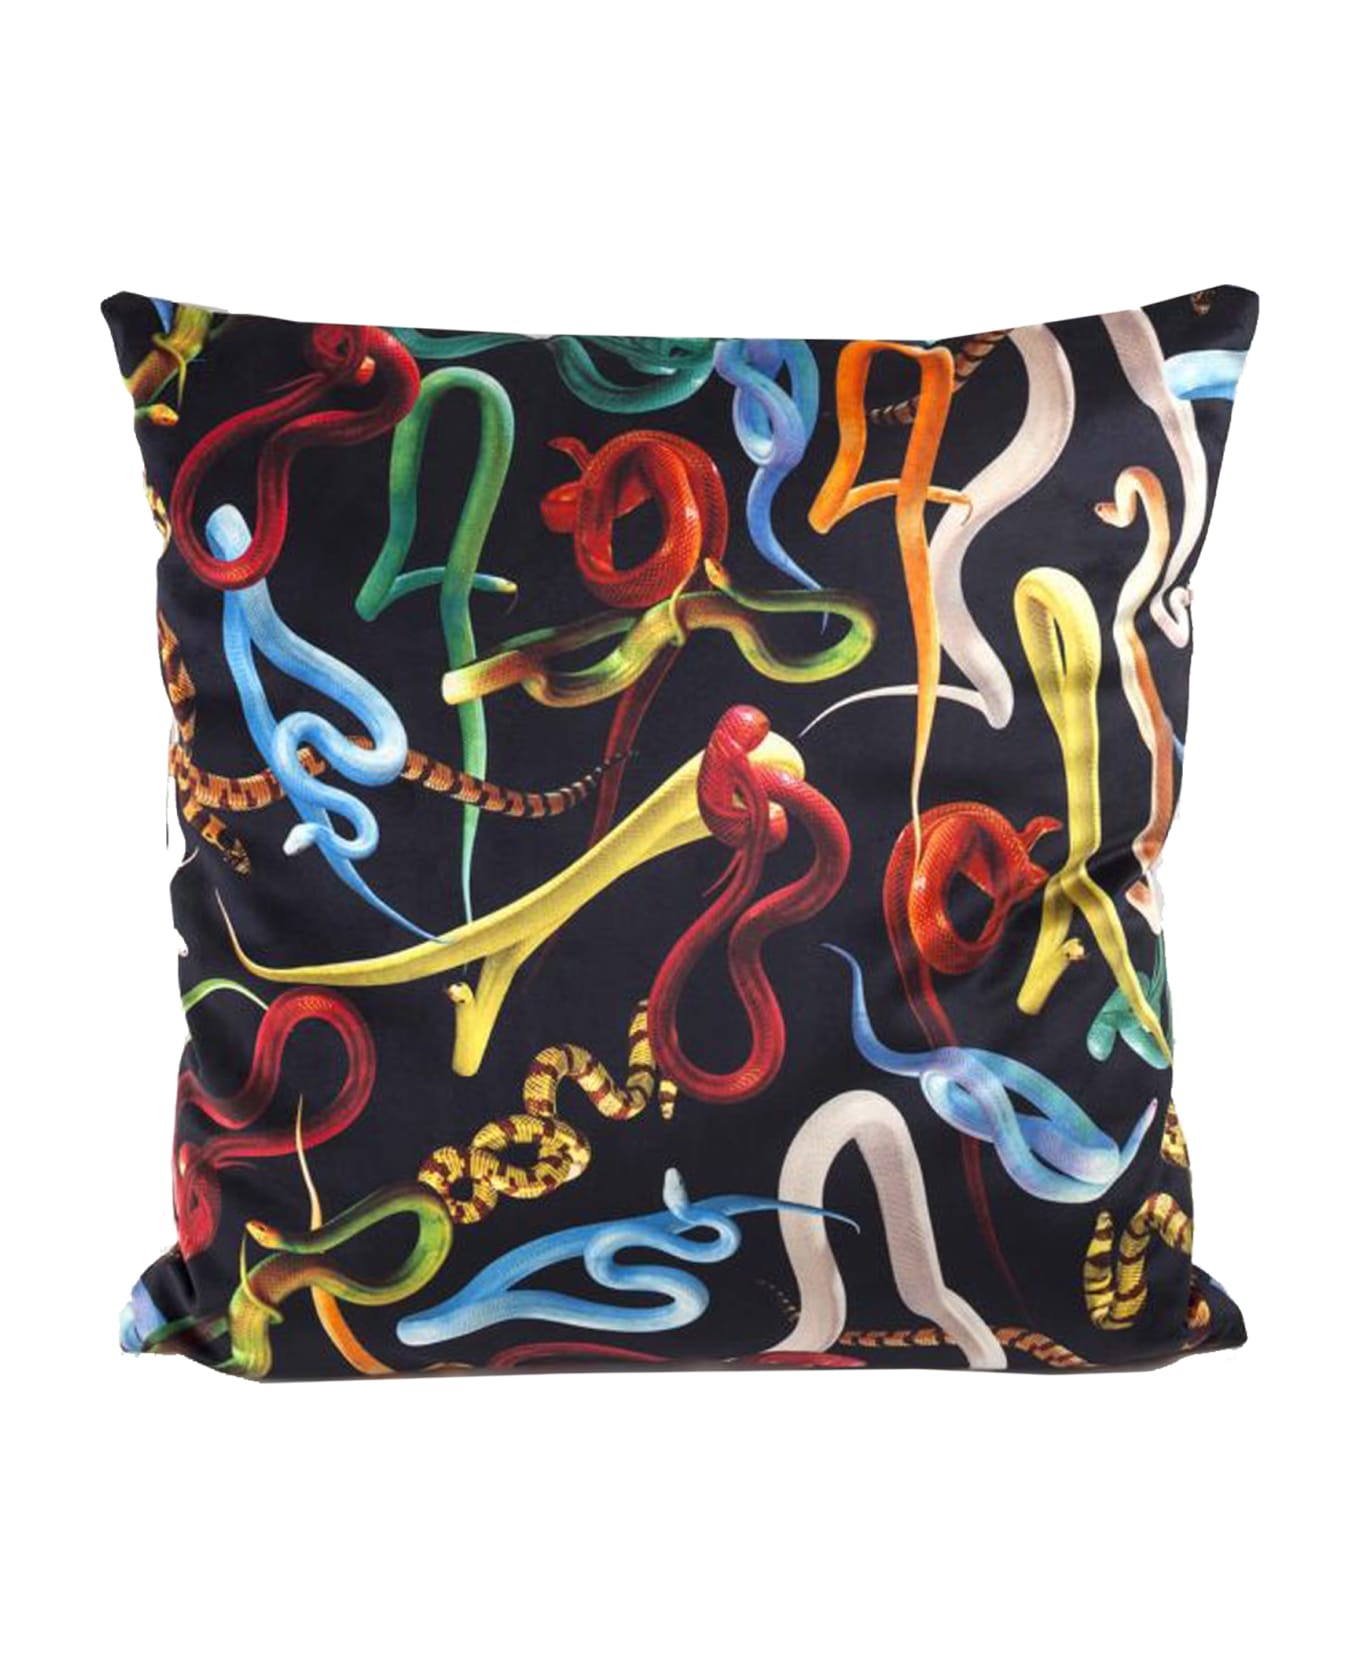 Seletti X Toiletpaper 'snakes' Cushion - Multicolor